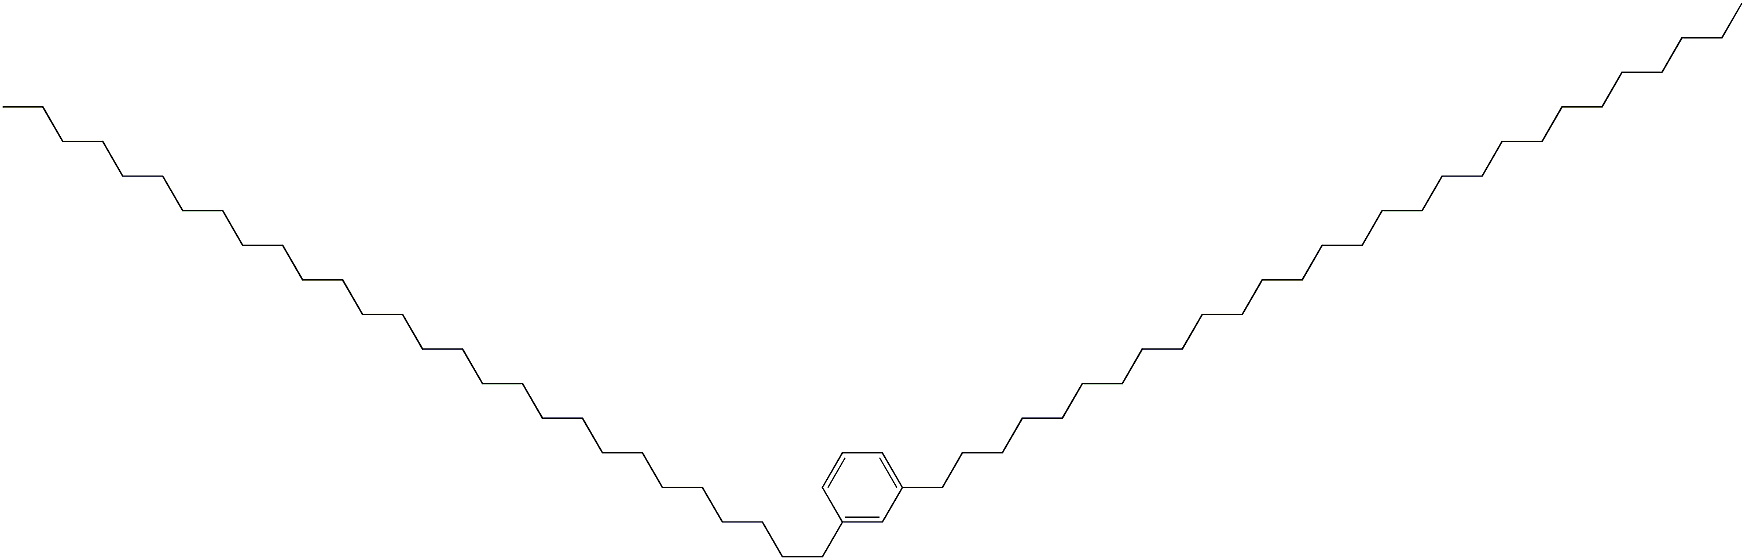 1,3-Dioctacosylbenzene Structure